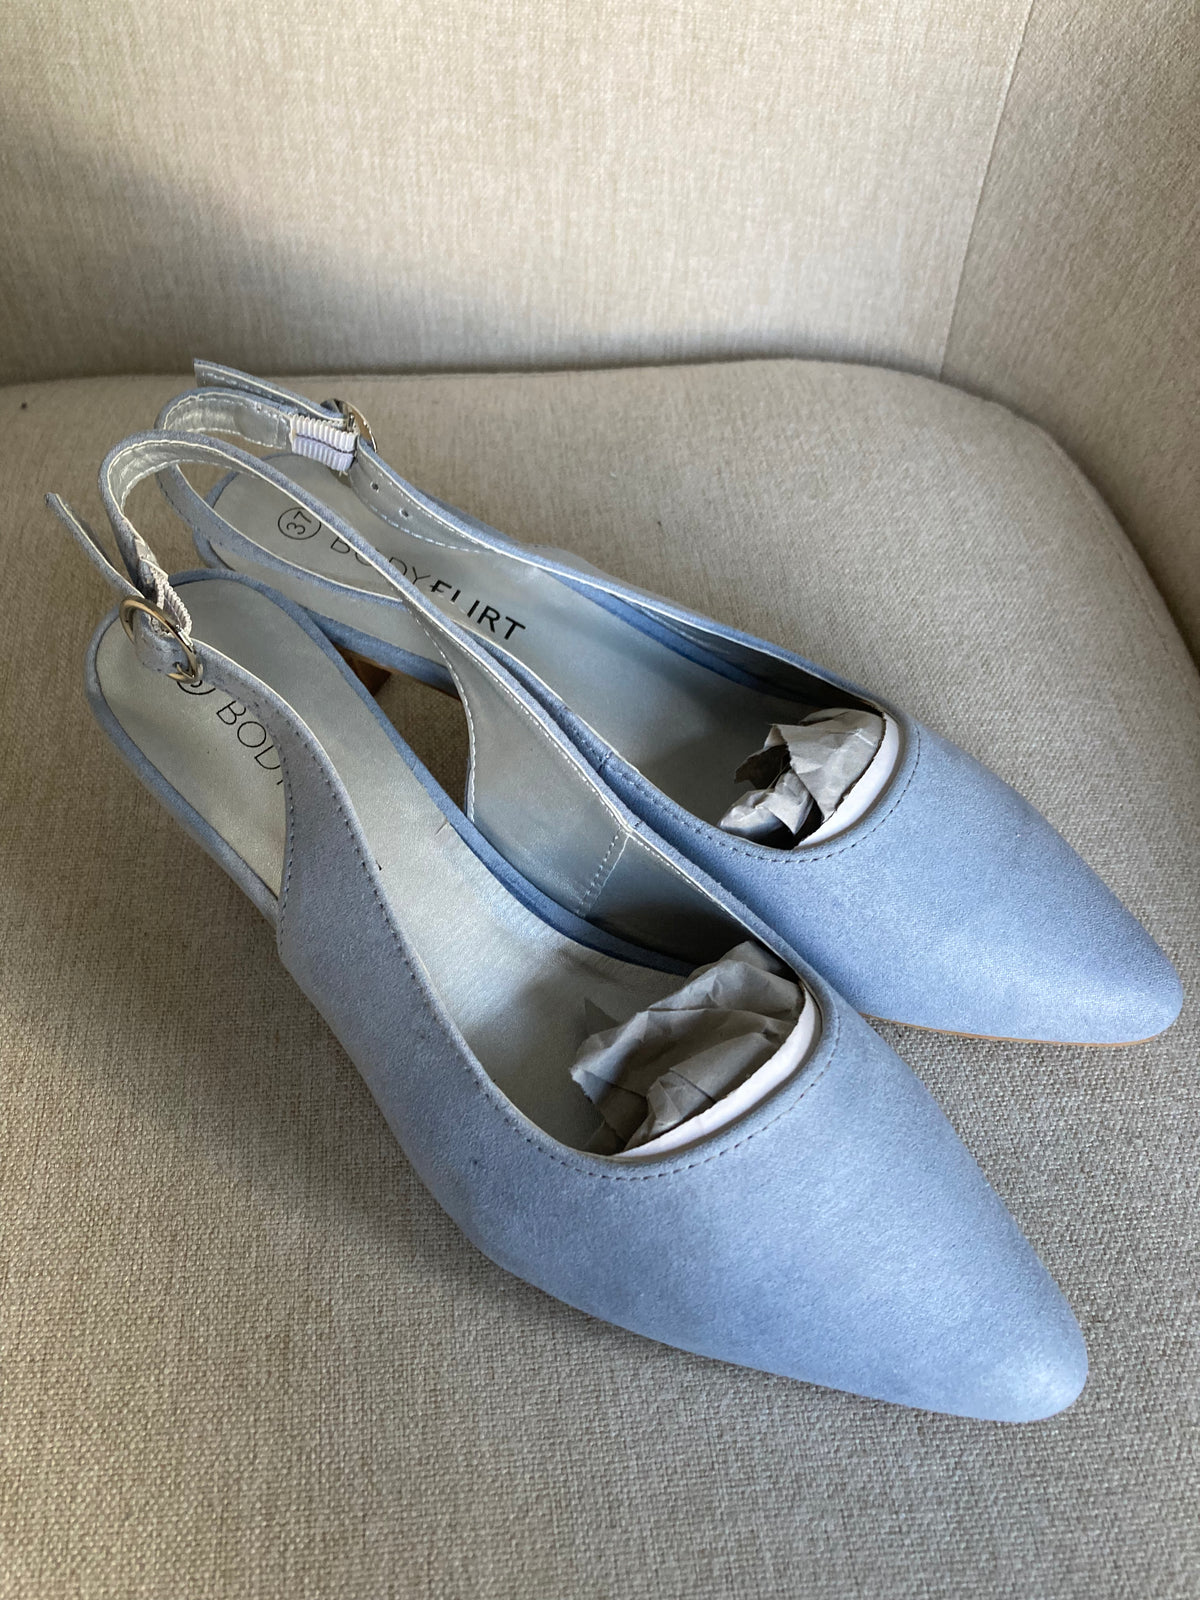 Pale blue heels size 4 uk By BPC